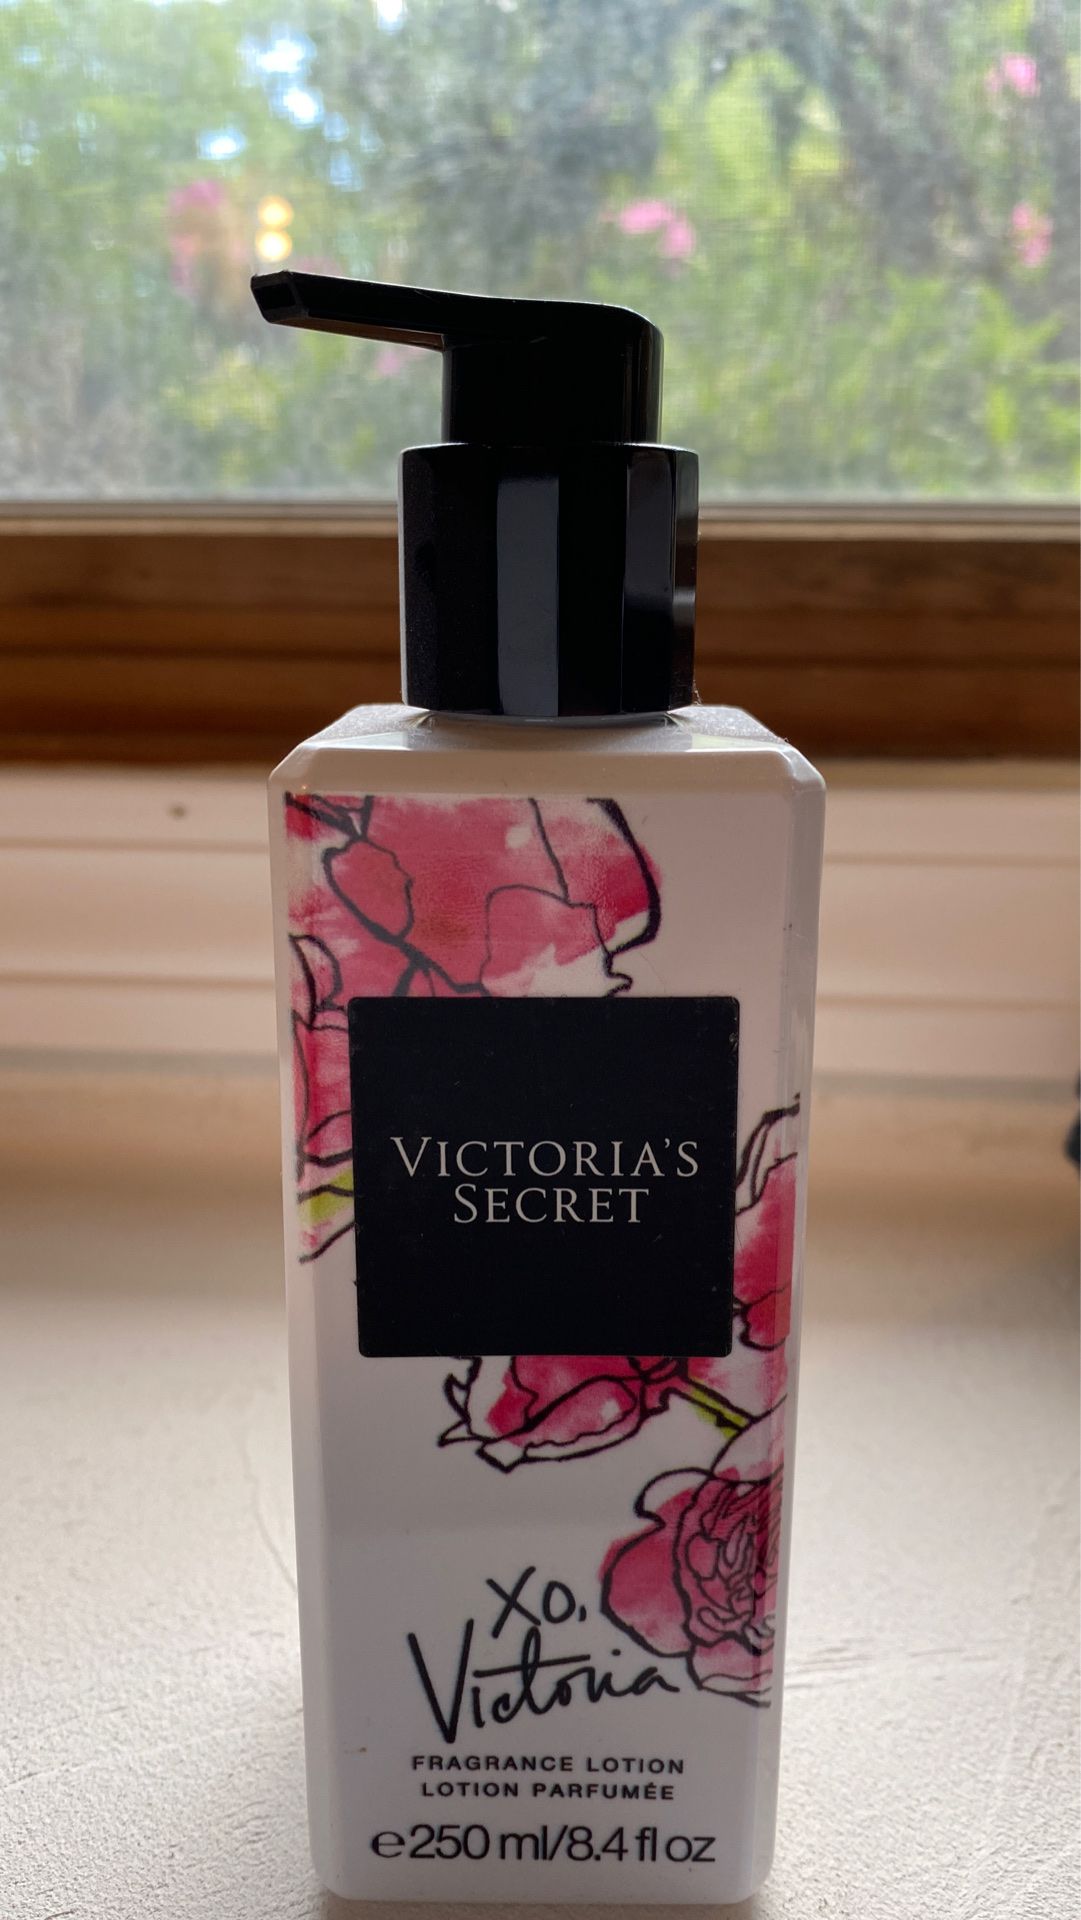 Xo Victoria fragrance lotion $16